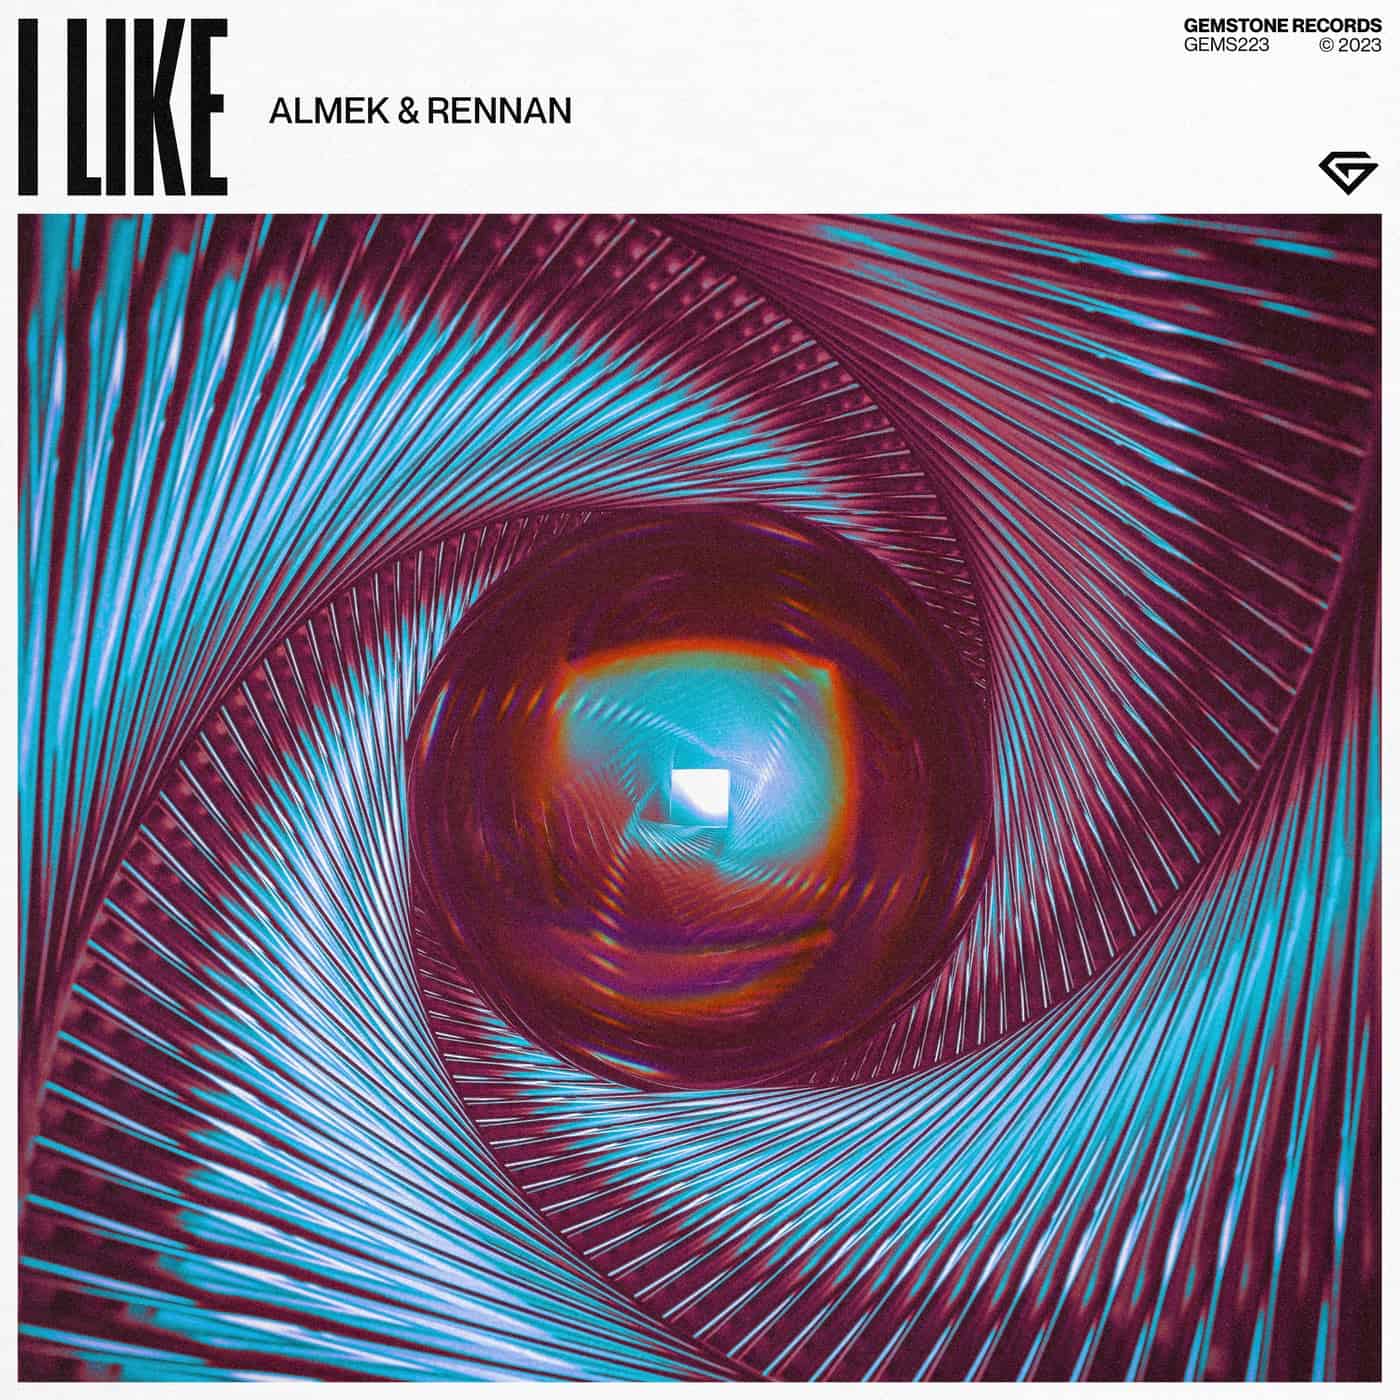 image cover: Rennan, Almek - I Like on Gemstone Records